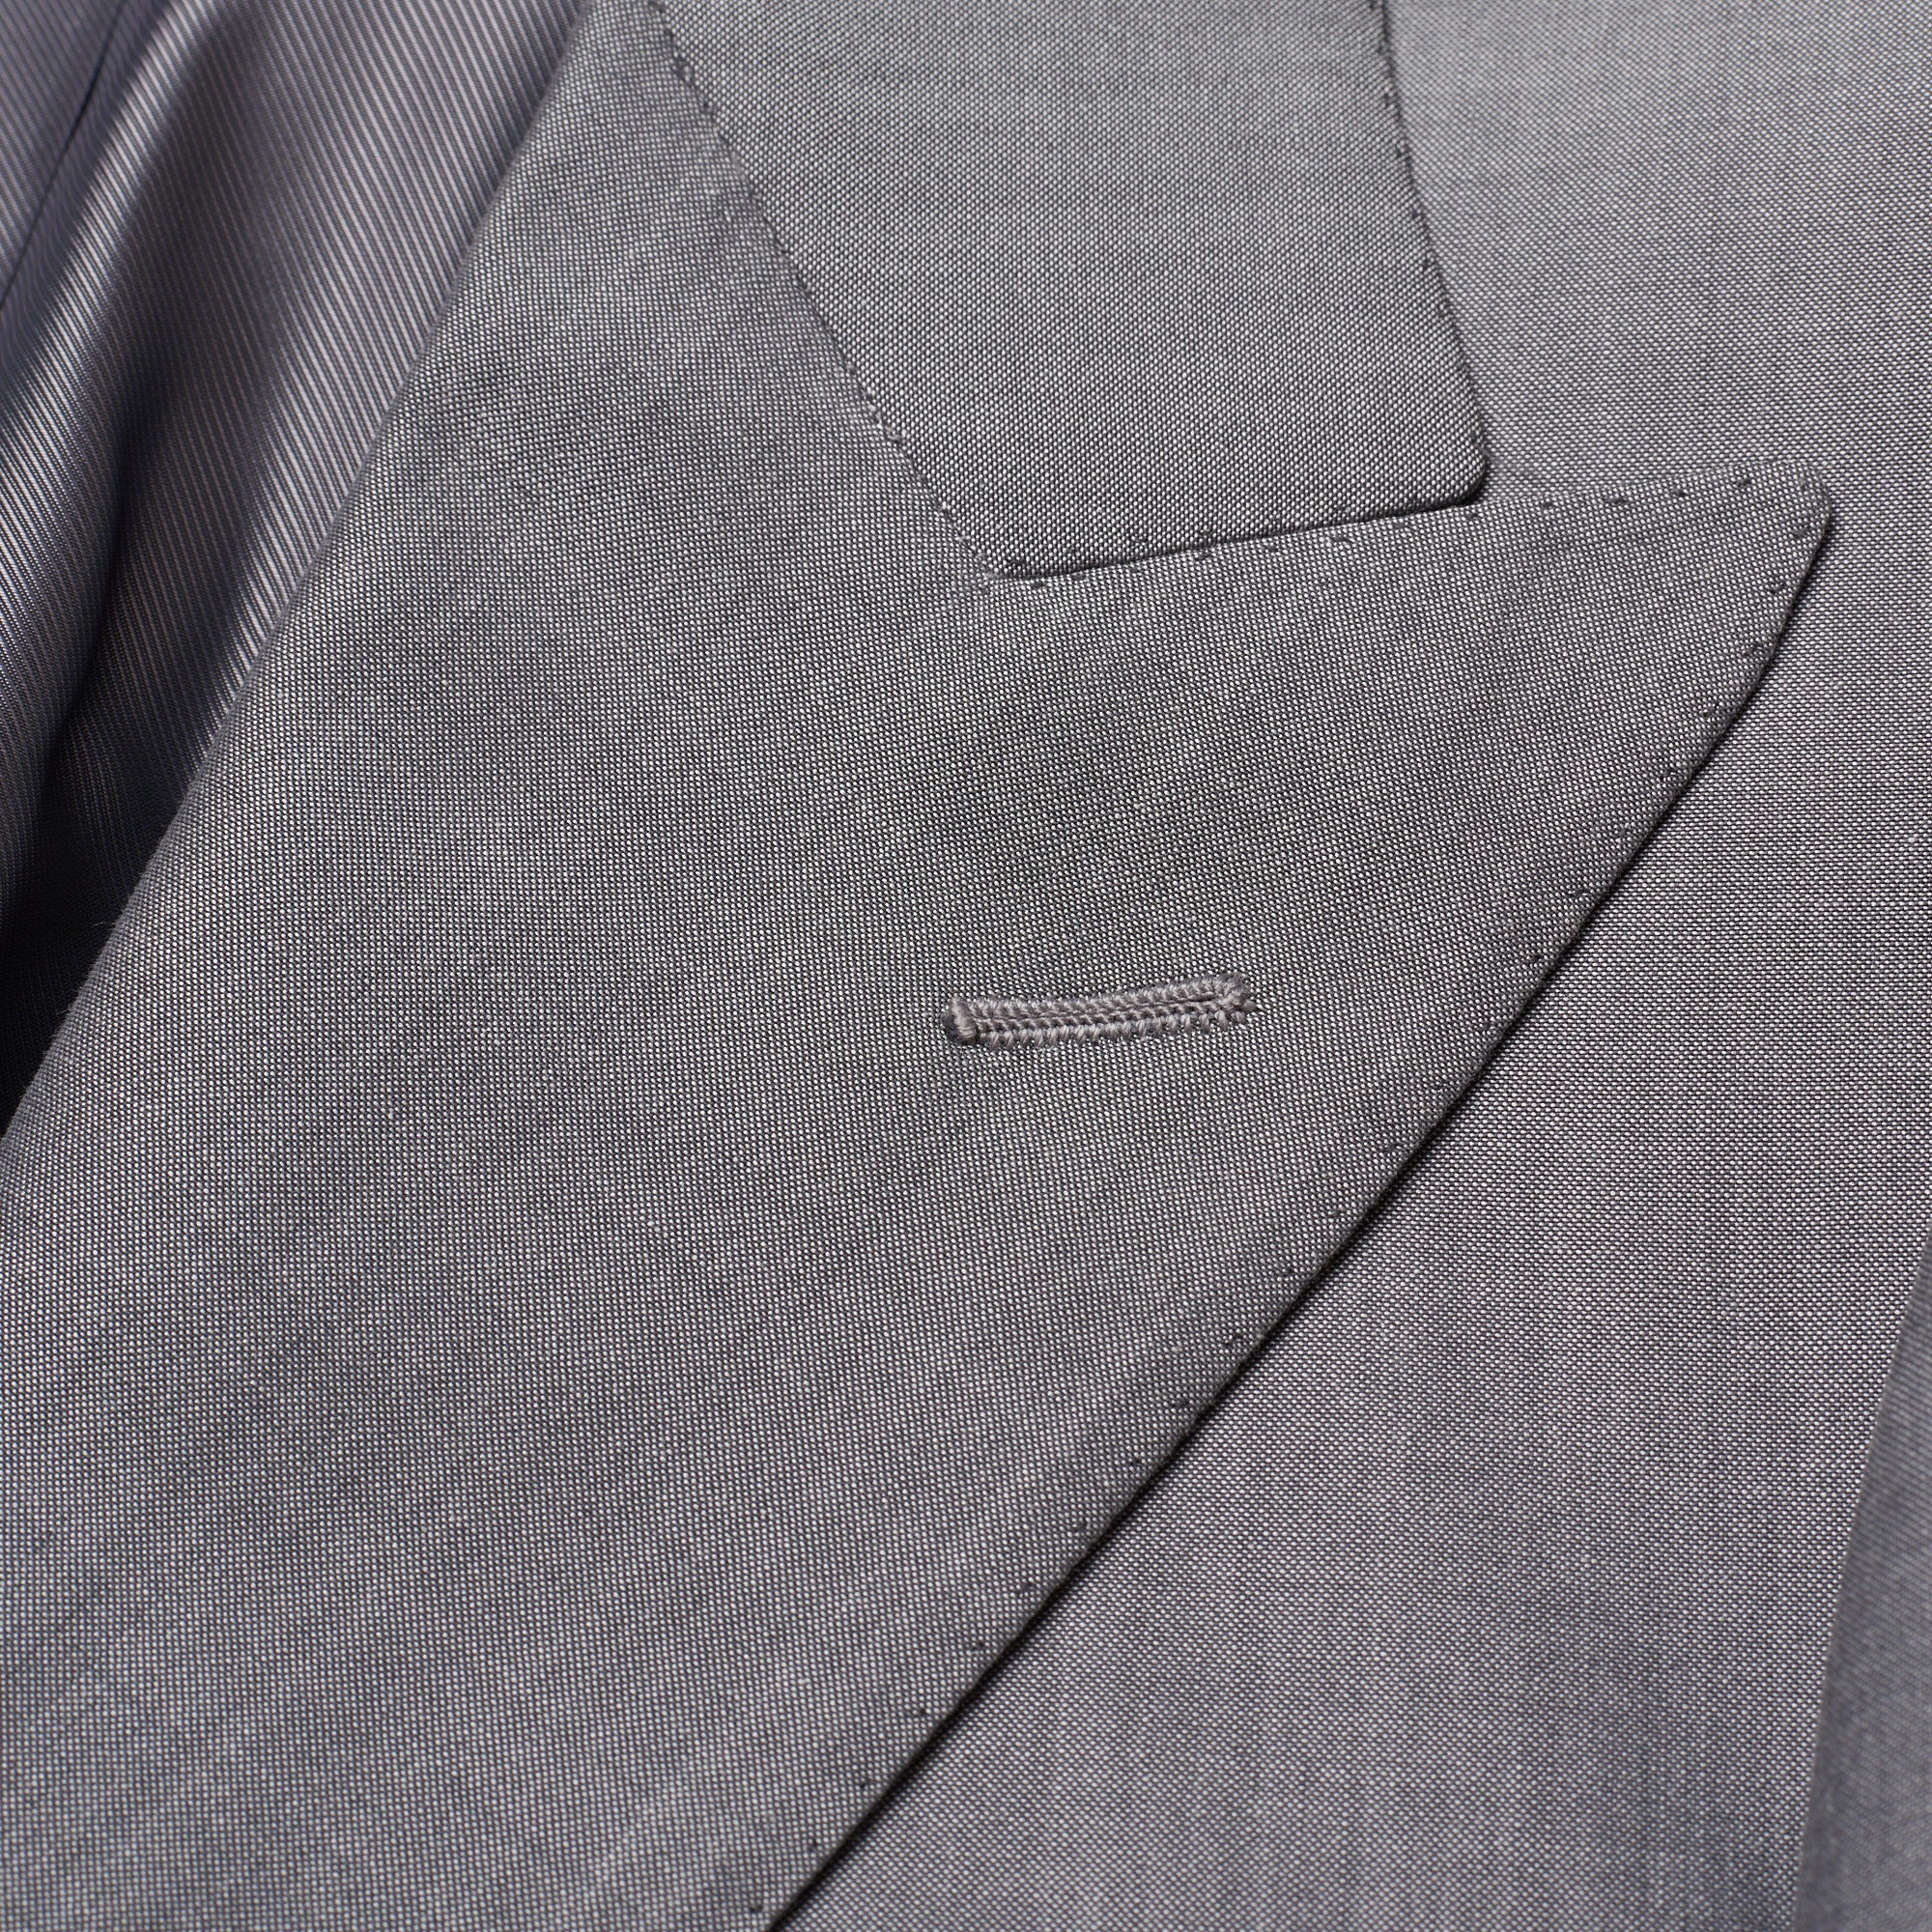 CESARE ATTOLINI Handmade Gray Cotton-Wool Super 120's Peak Lapel Suit NEW CESARE ATTOLINI